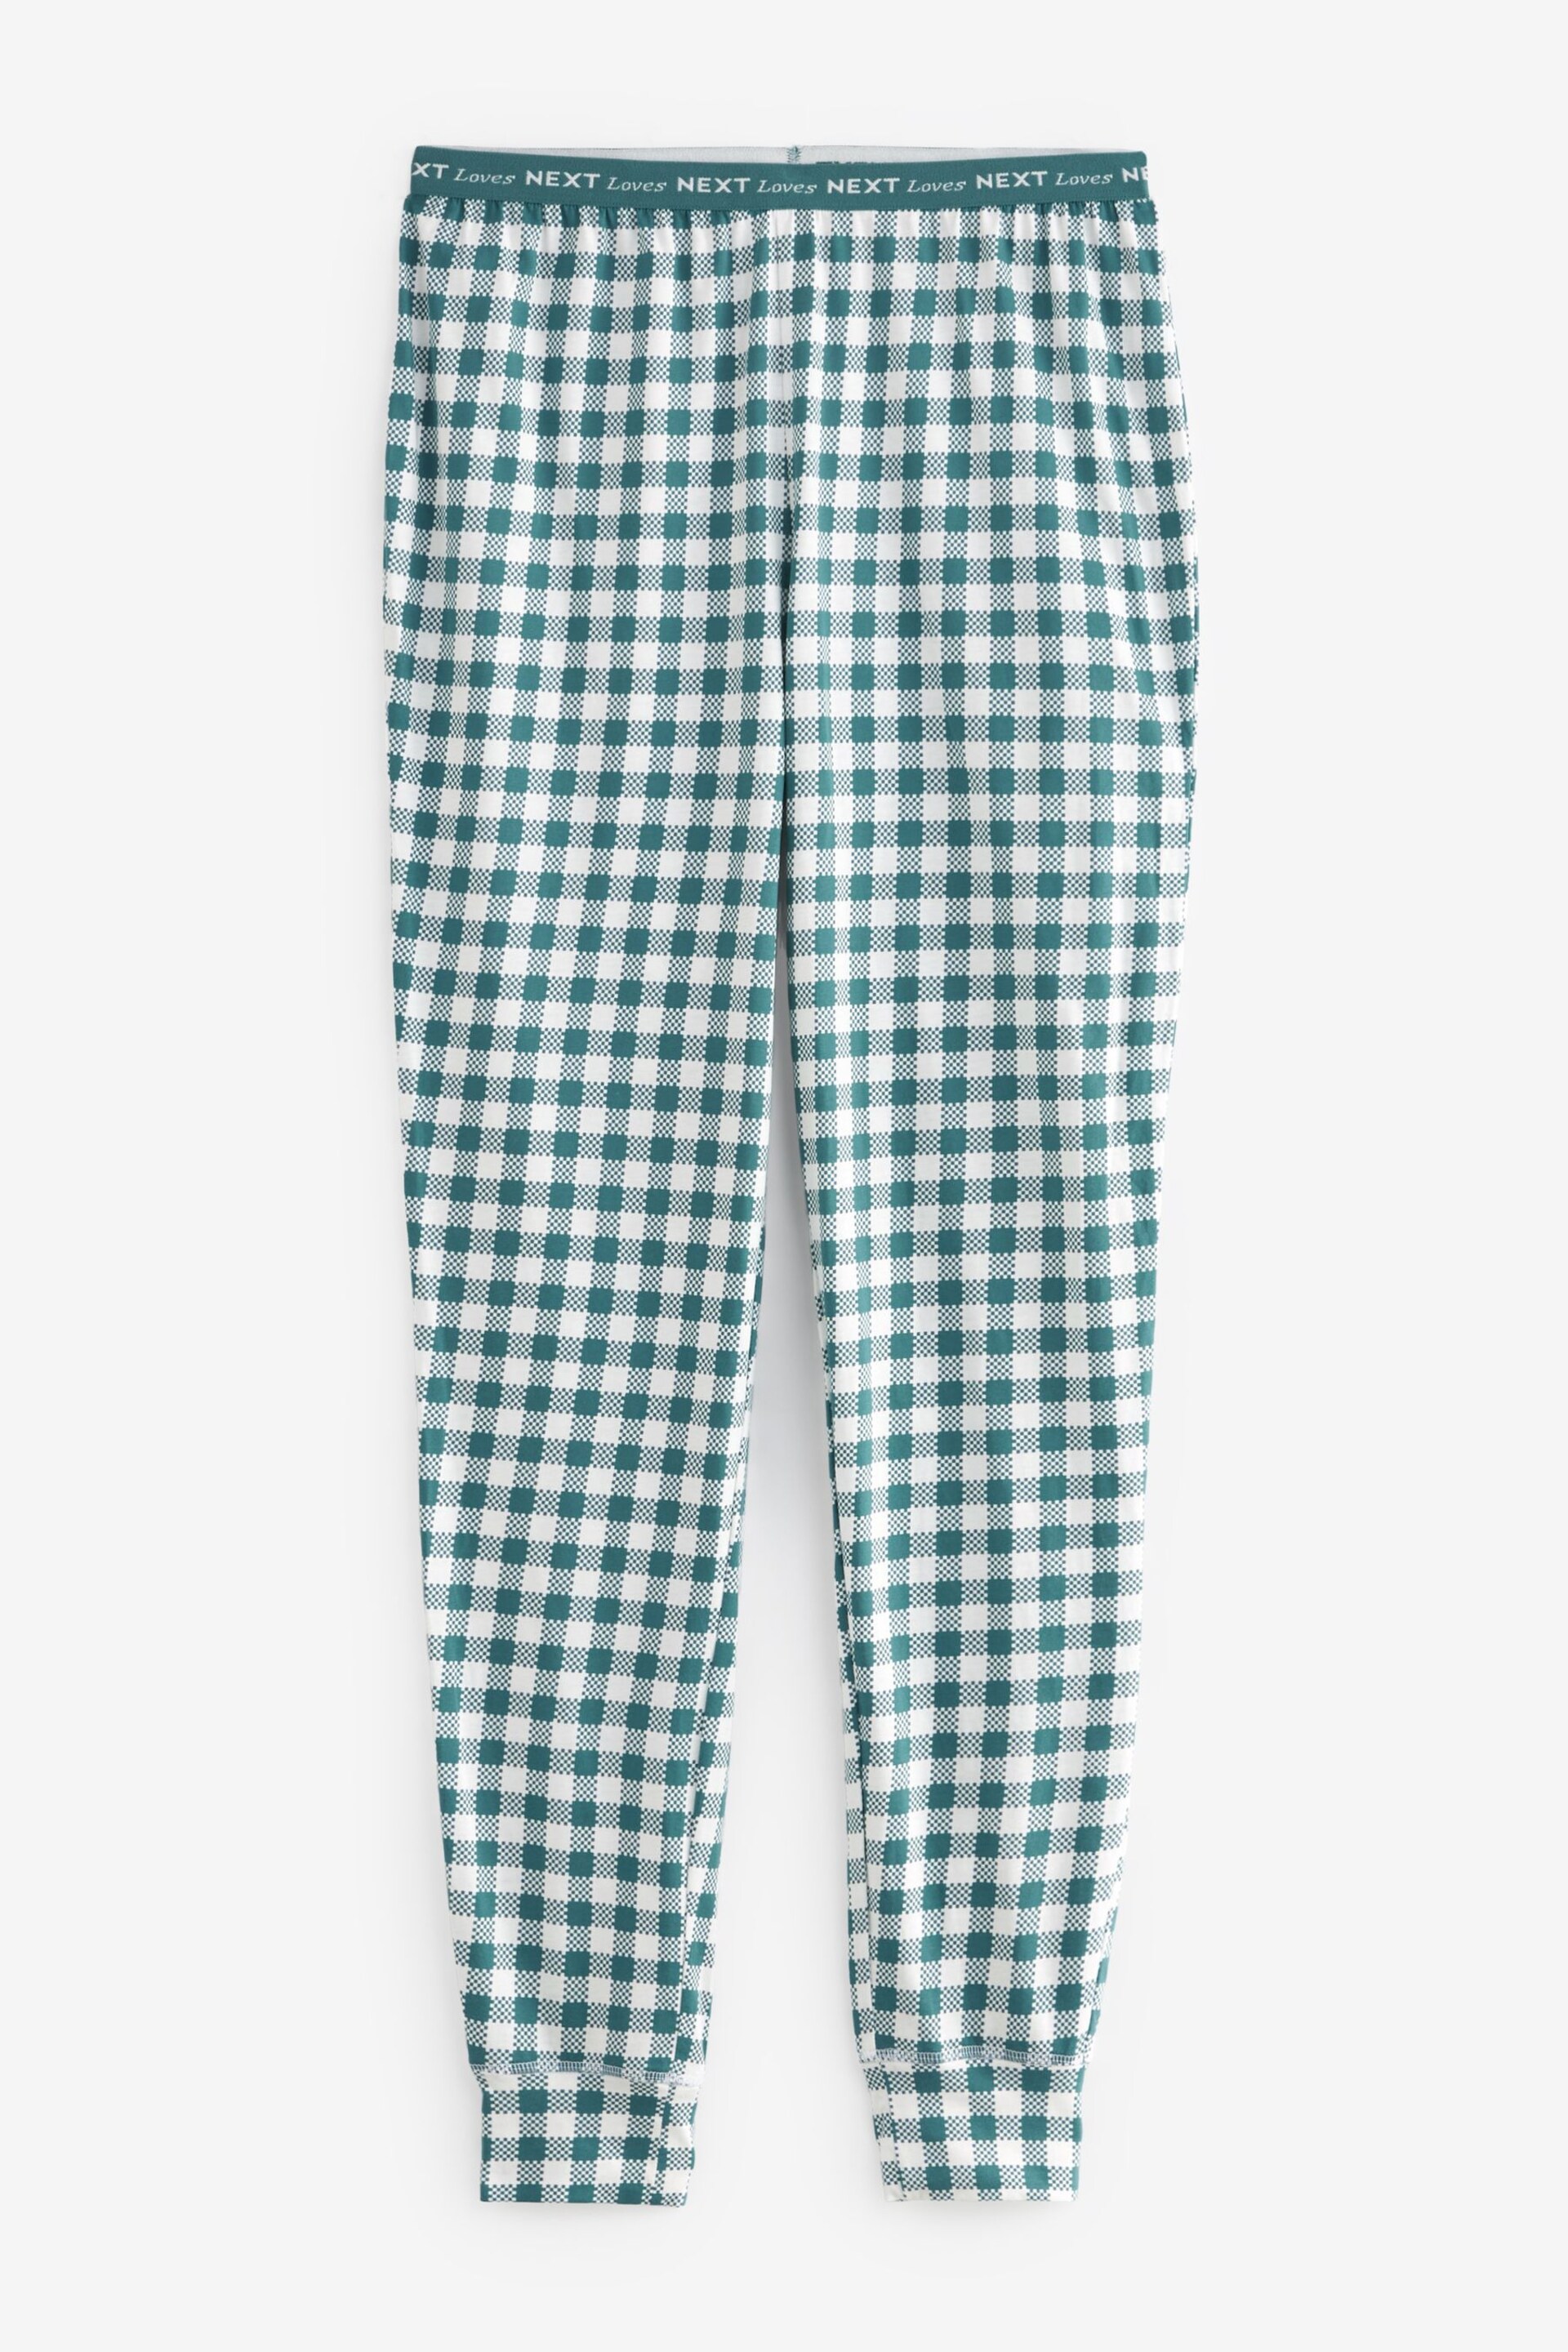 Blue/Pink Cotton Long Sleeve Pyjamas 2 Pack - Image 7 of 10